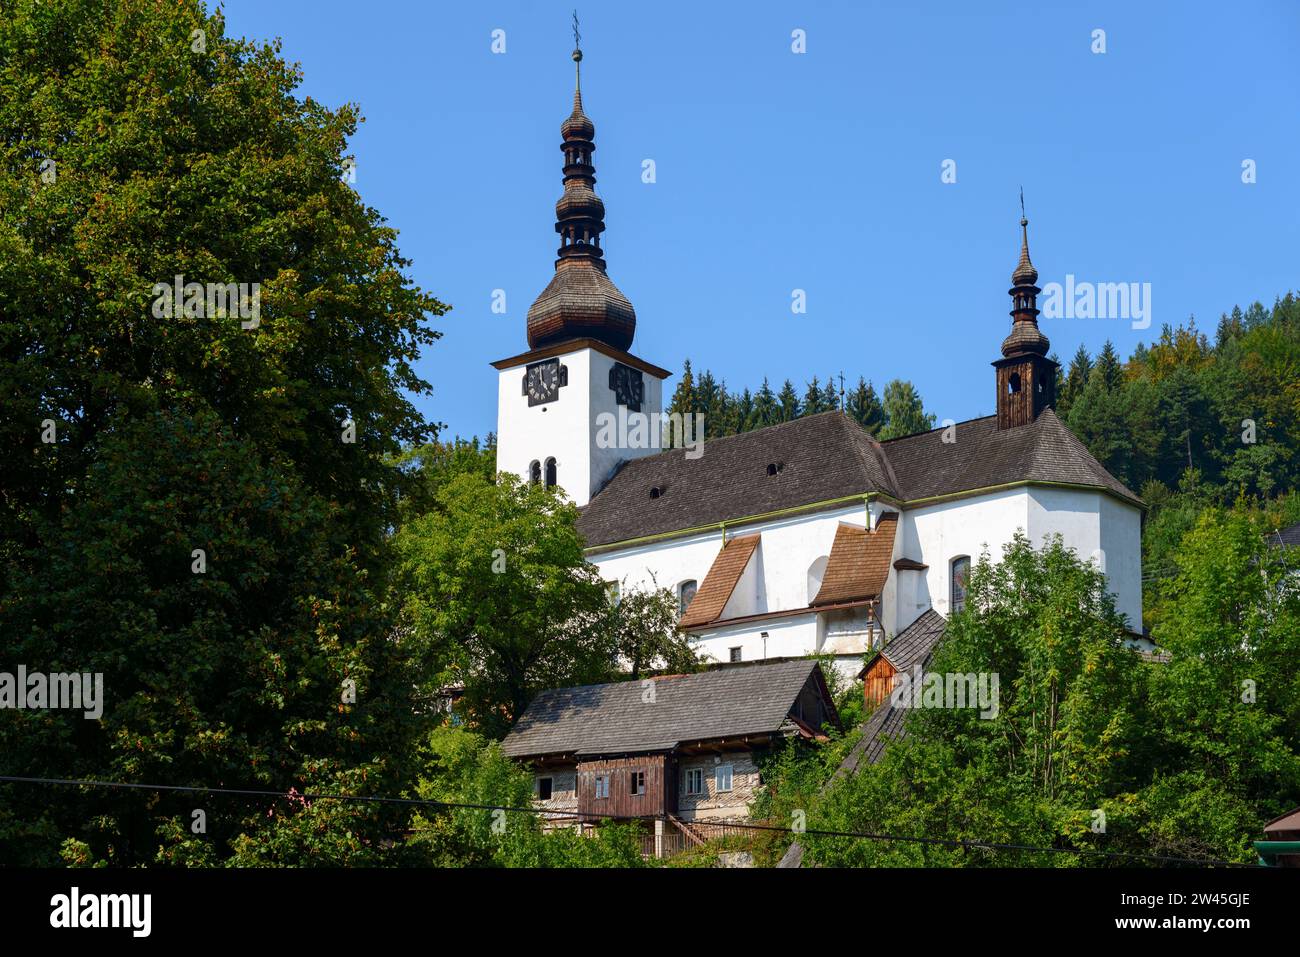 Kirche, Spania Dolina oder Herrengrund, Kreis Banska Bystrica, Region Horehronie, Slowakei Stockfoto